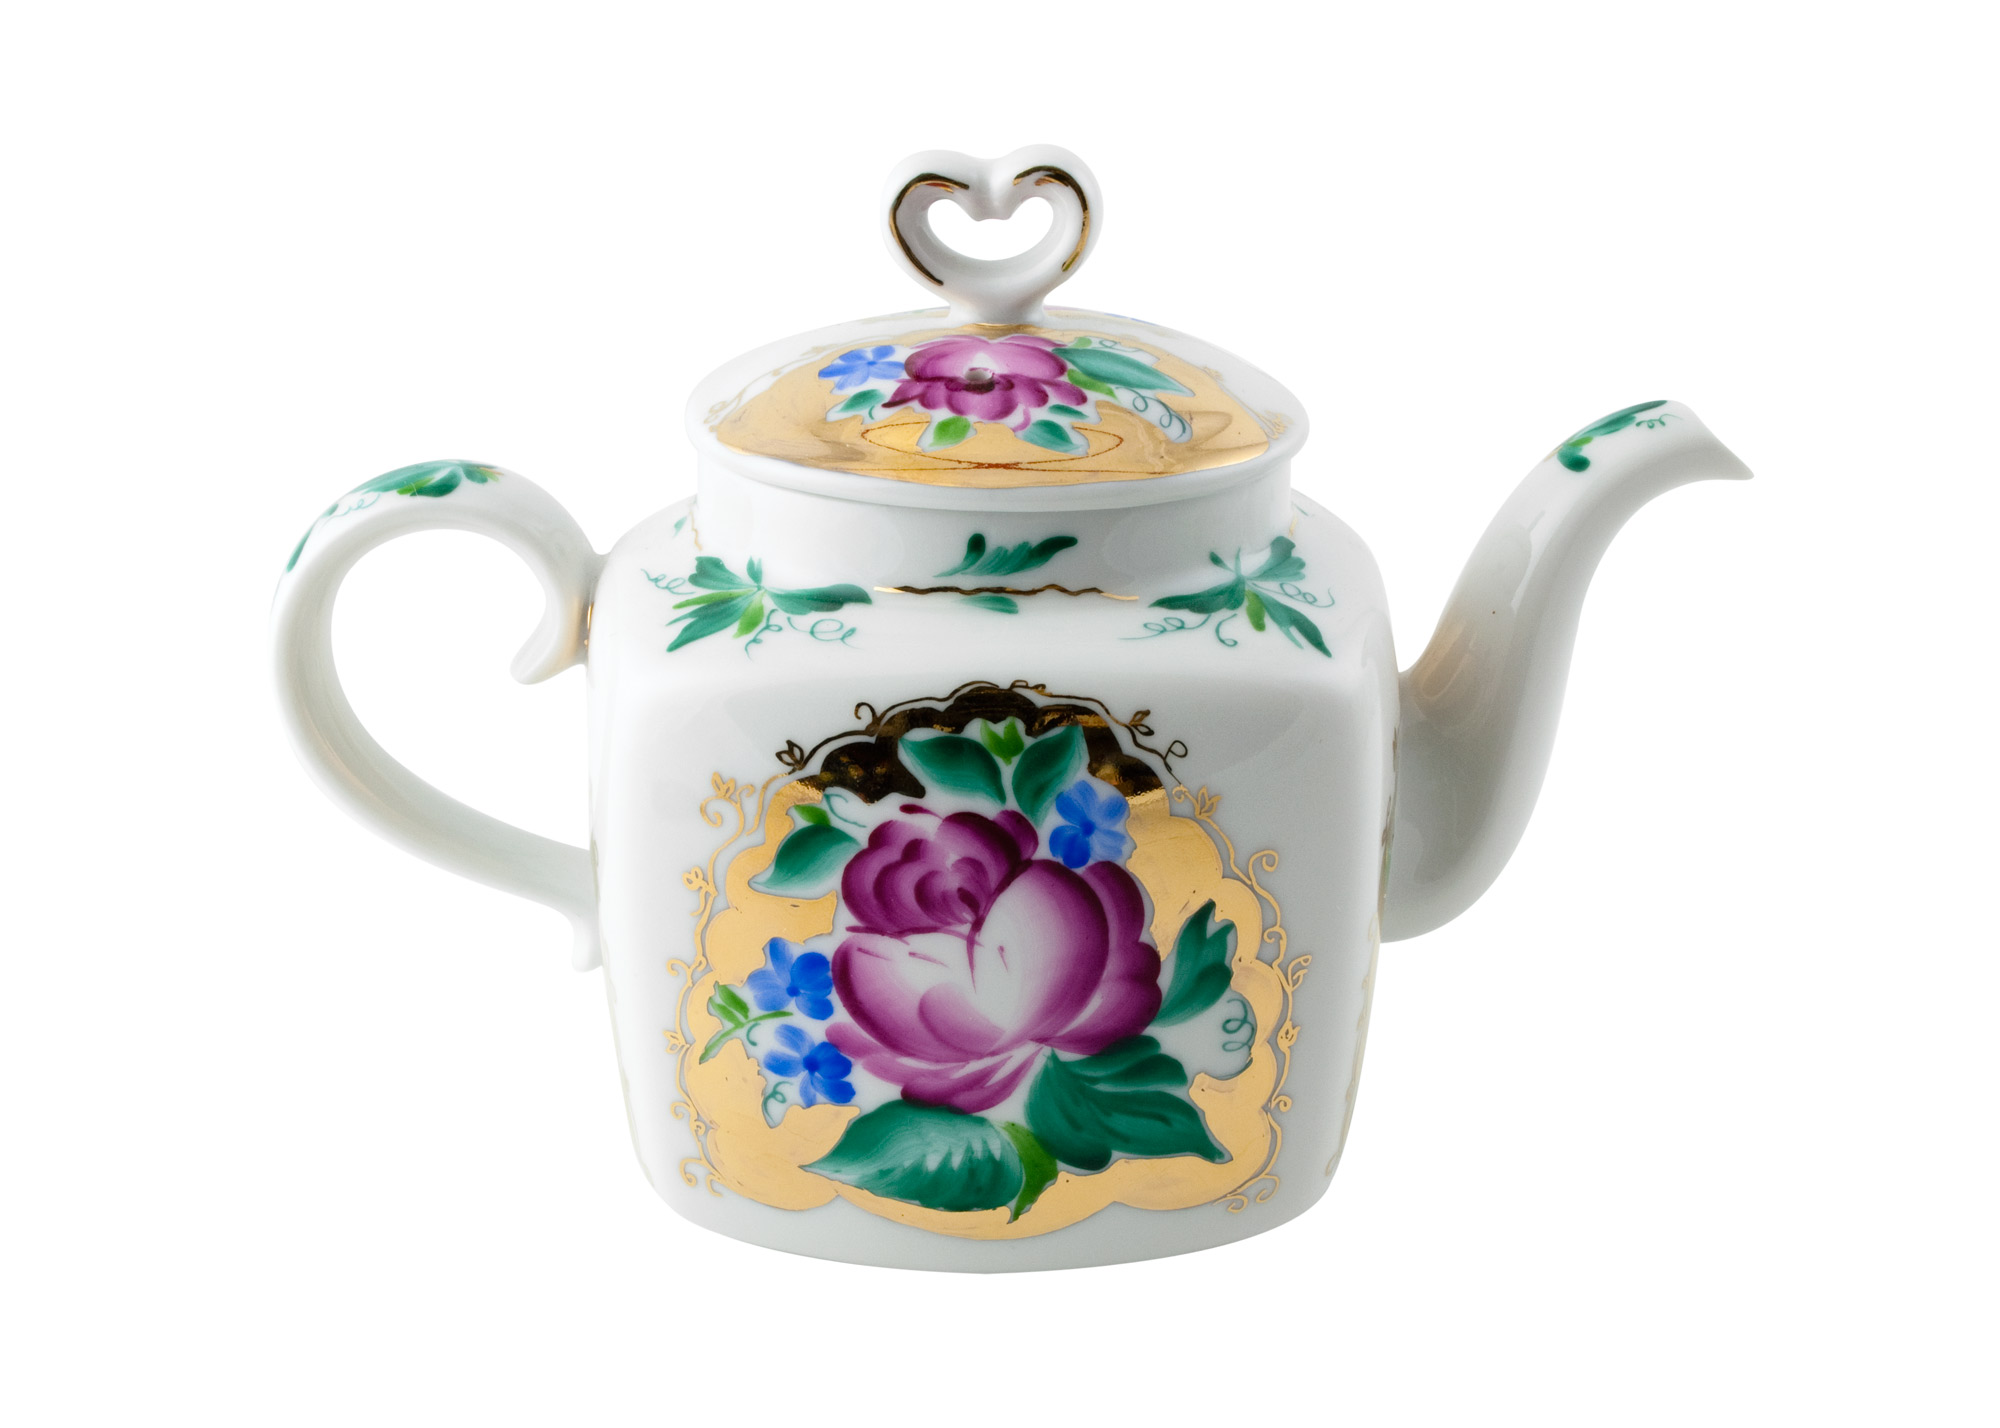 Buy Sweetheart teapot at GoldenCockerel.com